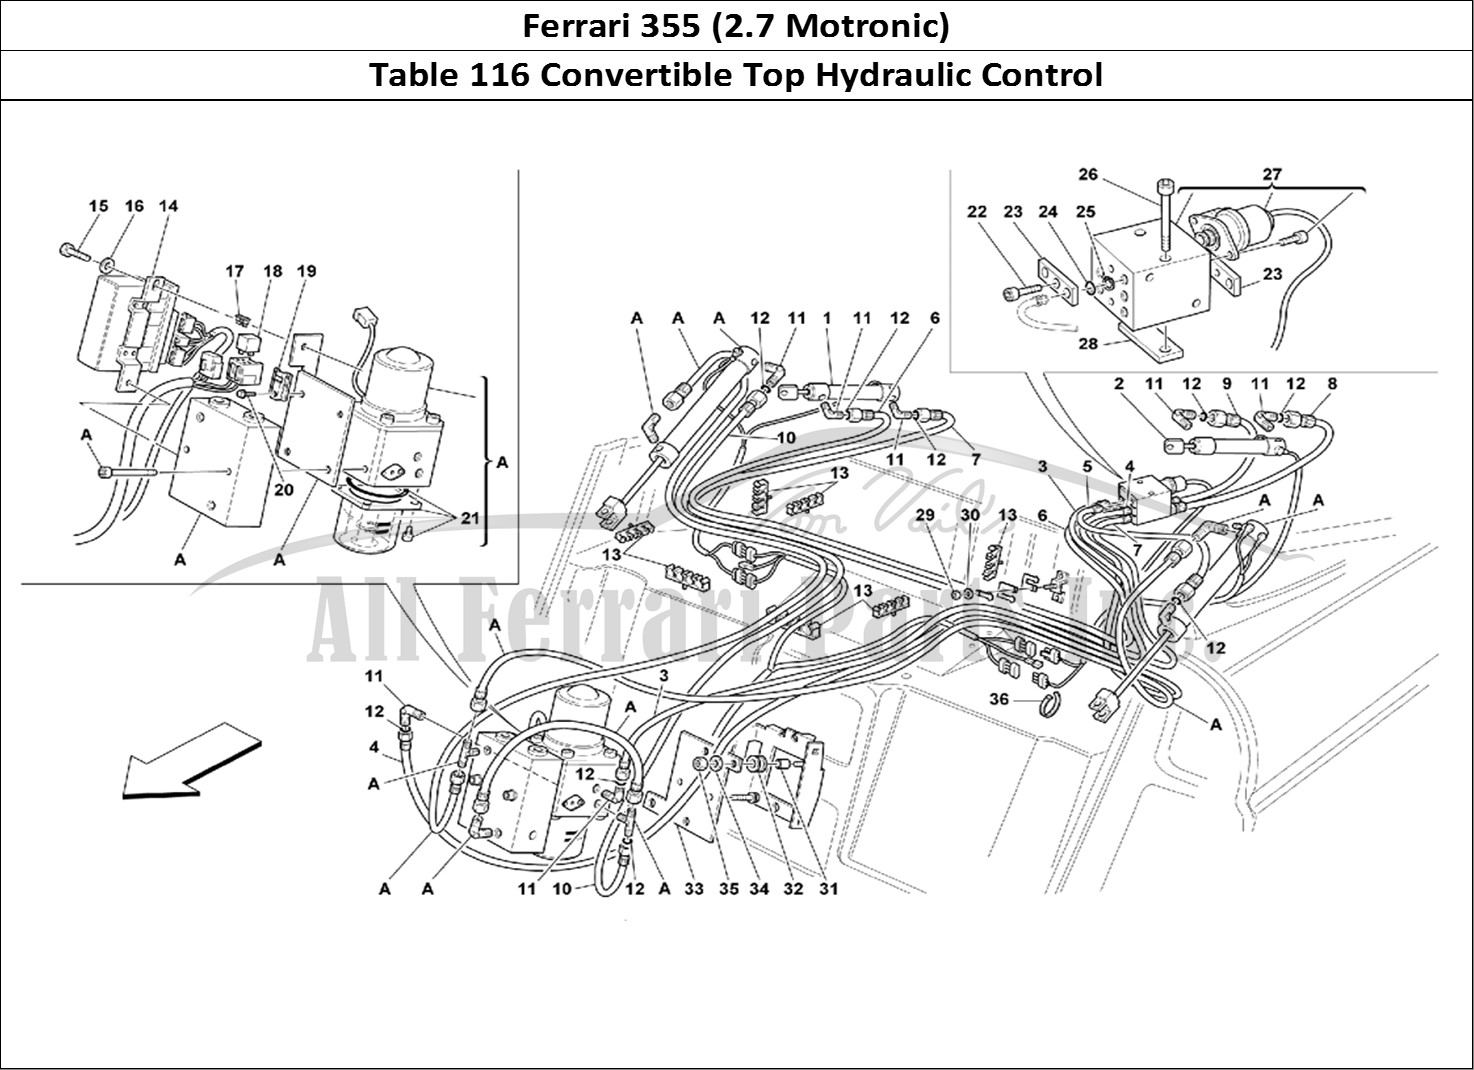 Ferrari Parts Ferrari 355 (2.7 Motronic) Page 116 Top Hydraulic Control -Va